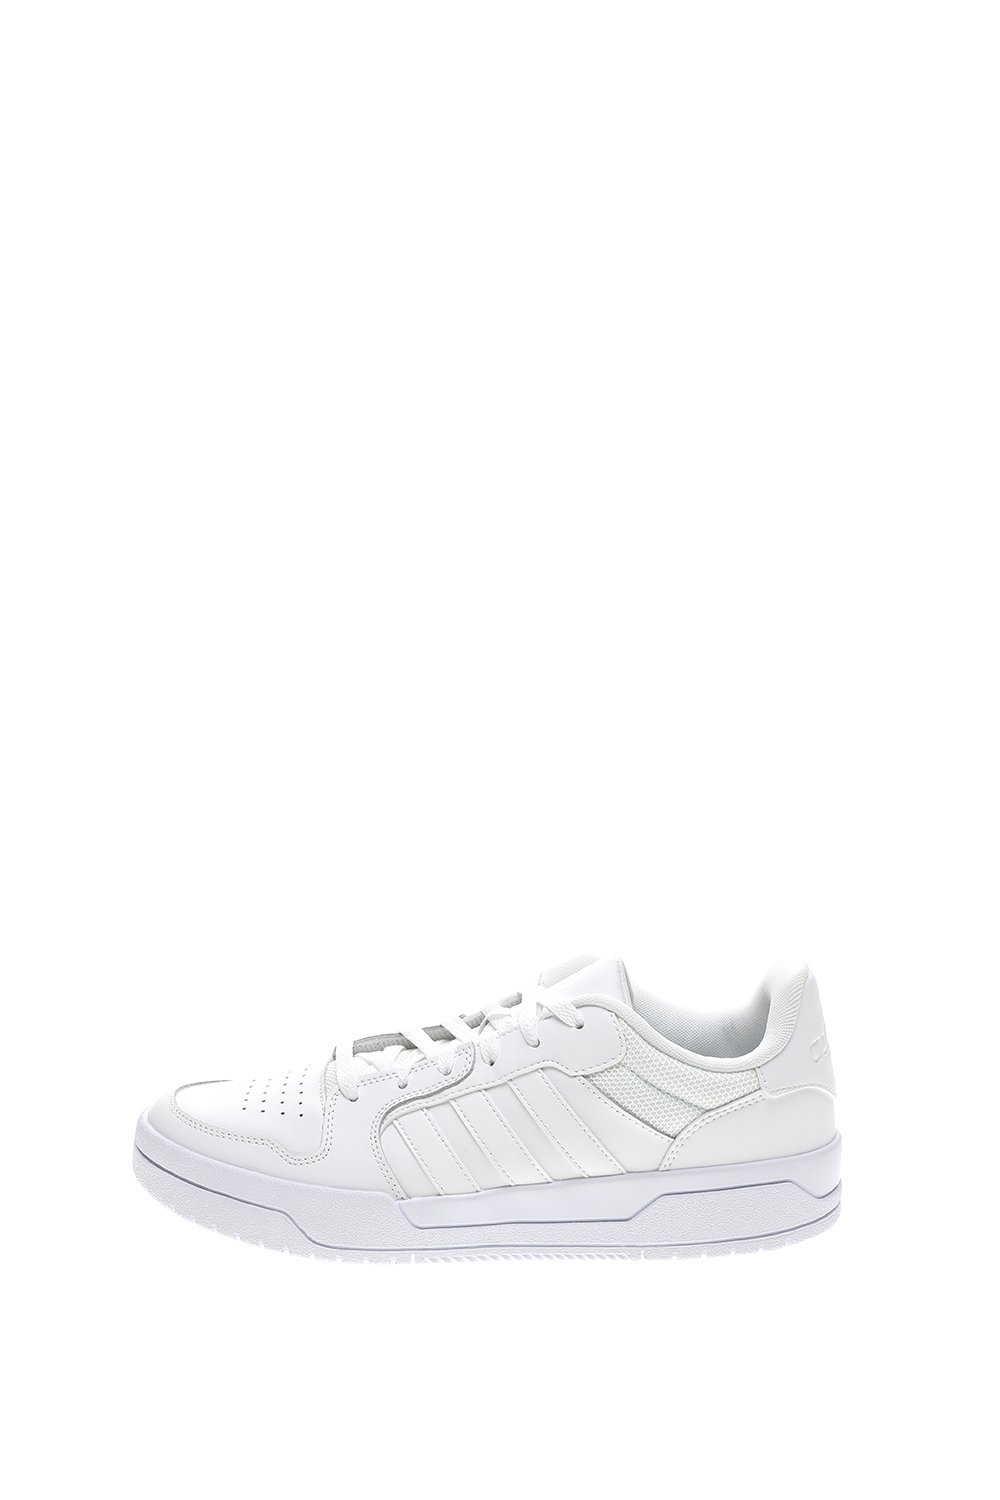 adidas Originals - Ανδρικά παπούτσια tennis adidas Originals Entrap 1ON1 λευκά Ανδρικά/Παπούτσια/Αθλητικά/Tennis